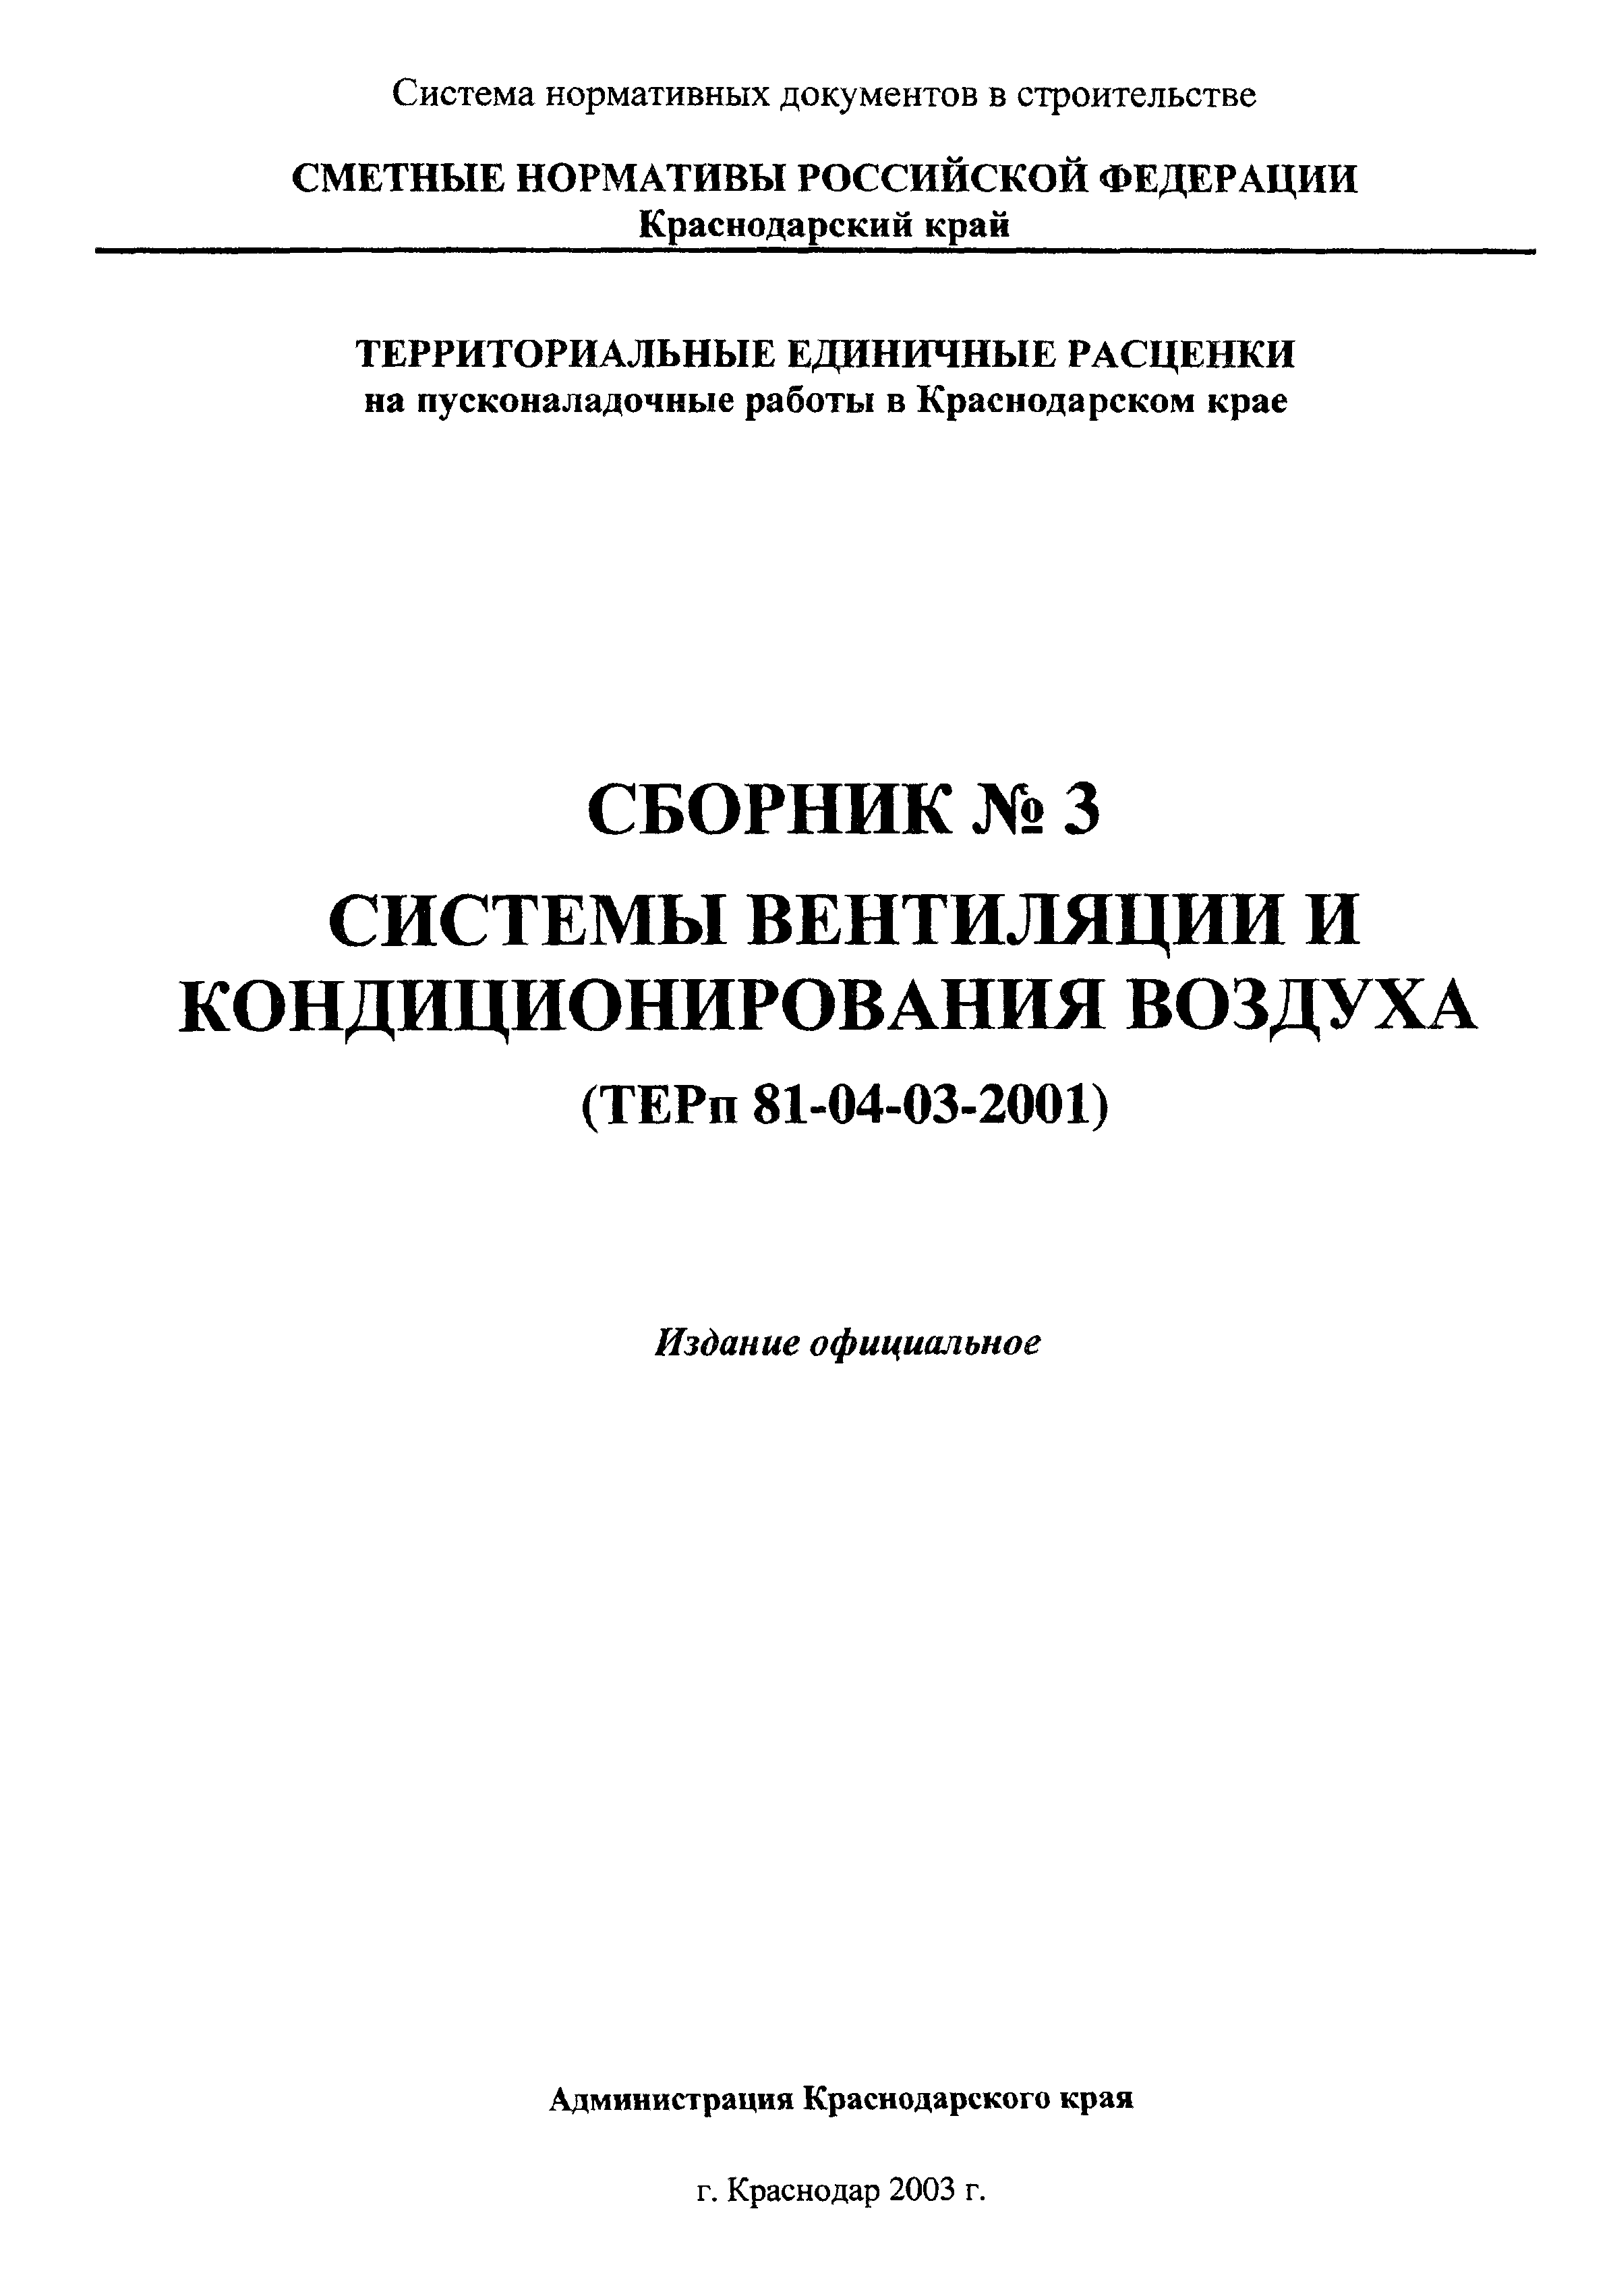 ТЕРп Краснодарского края 2001-03